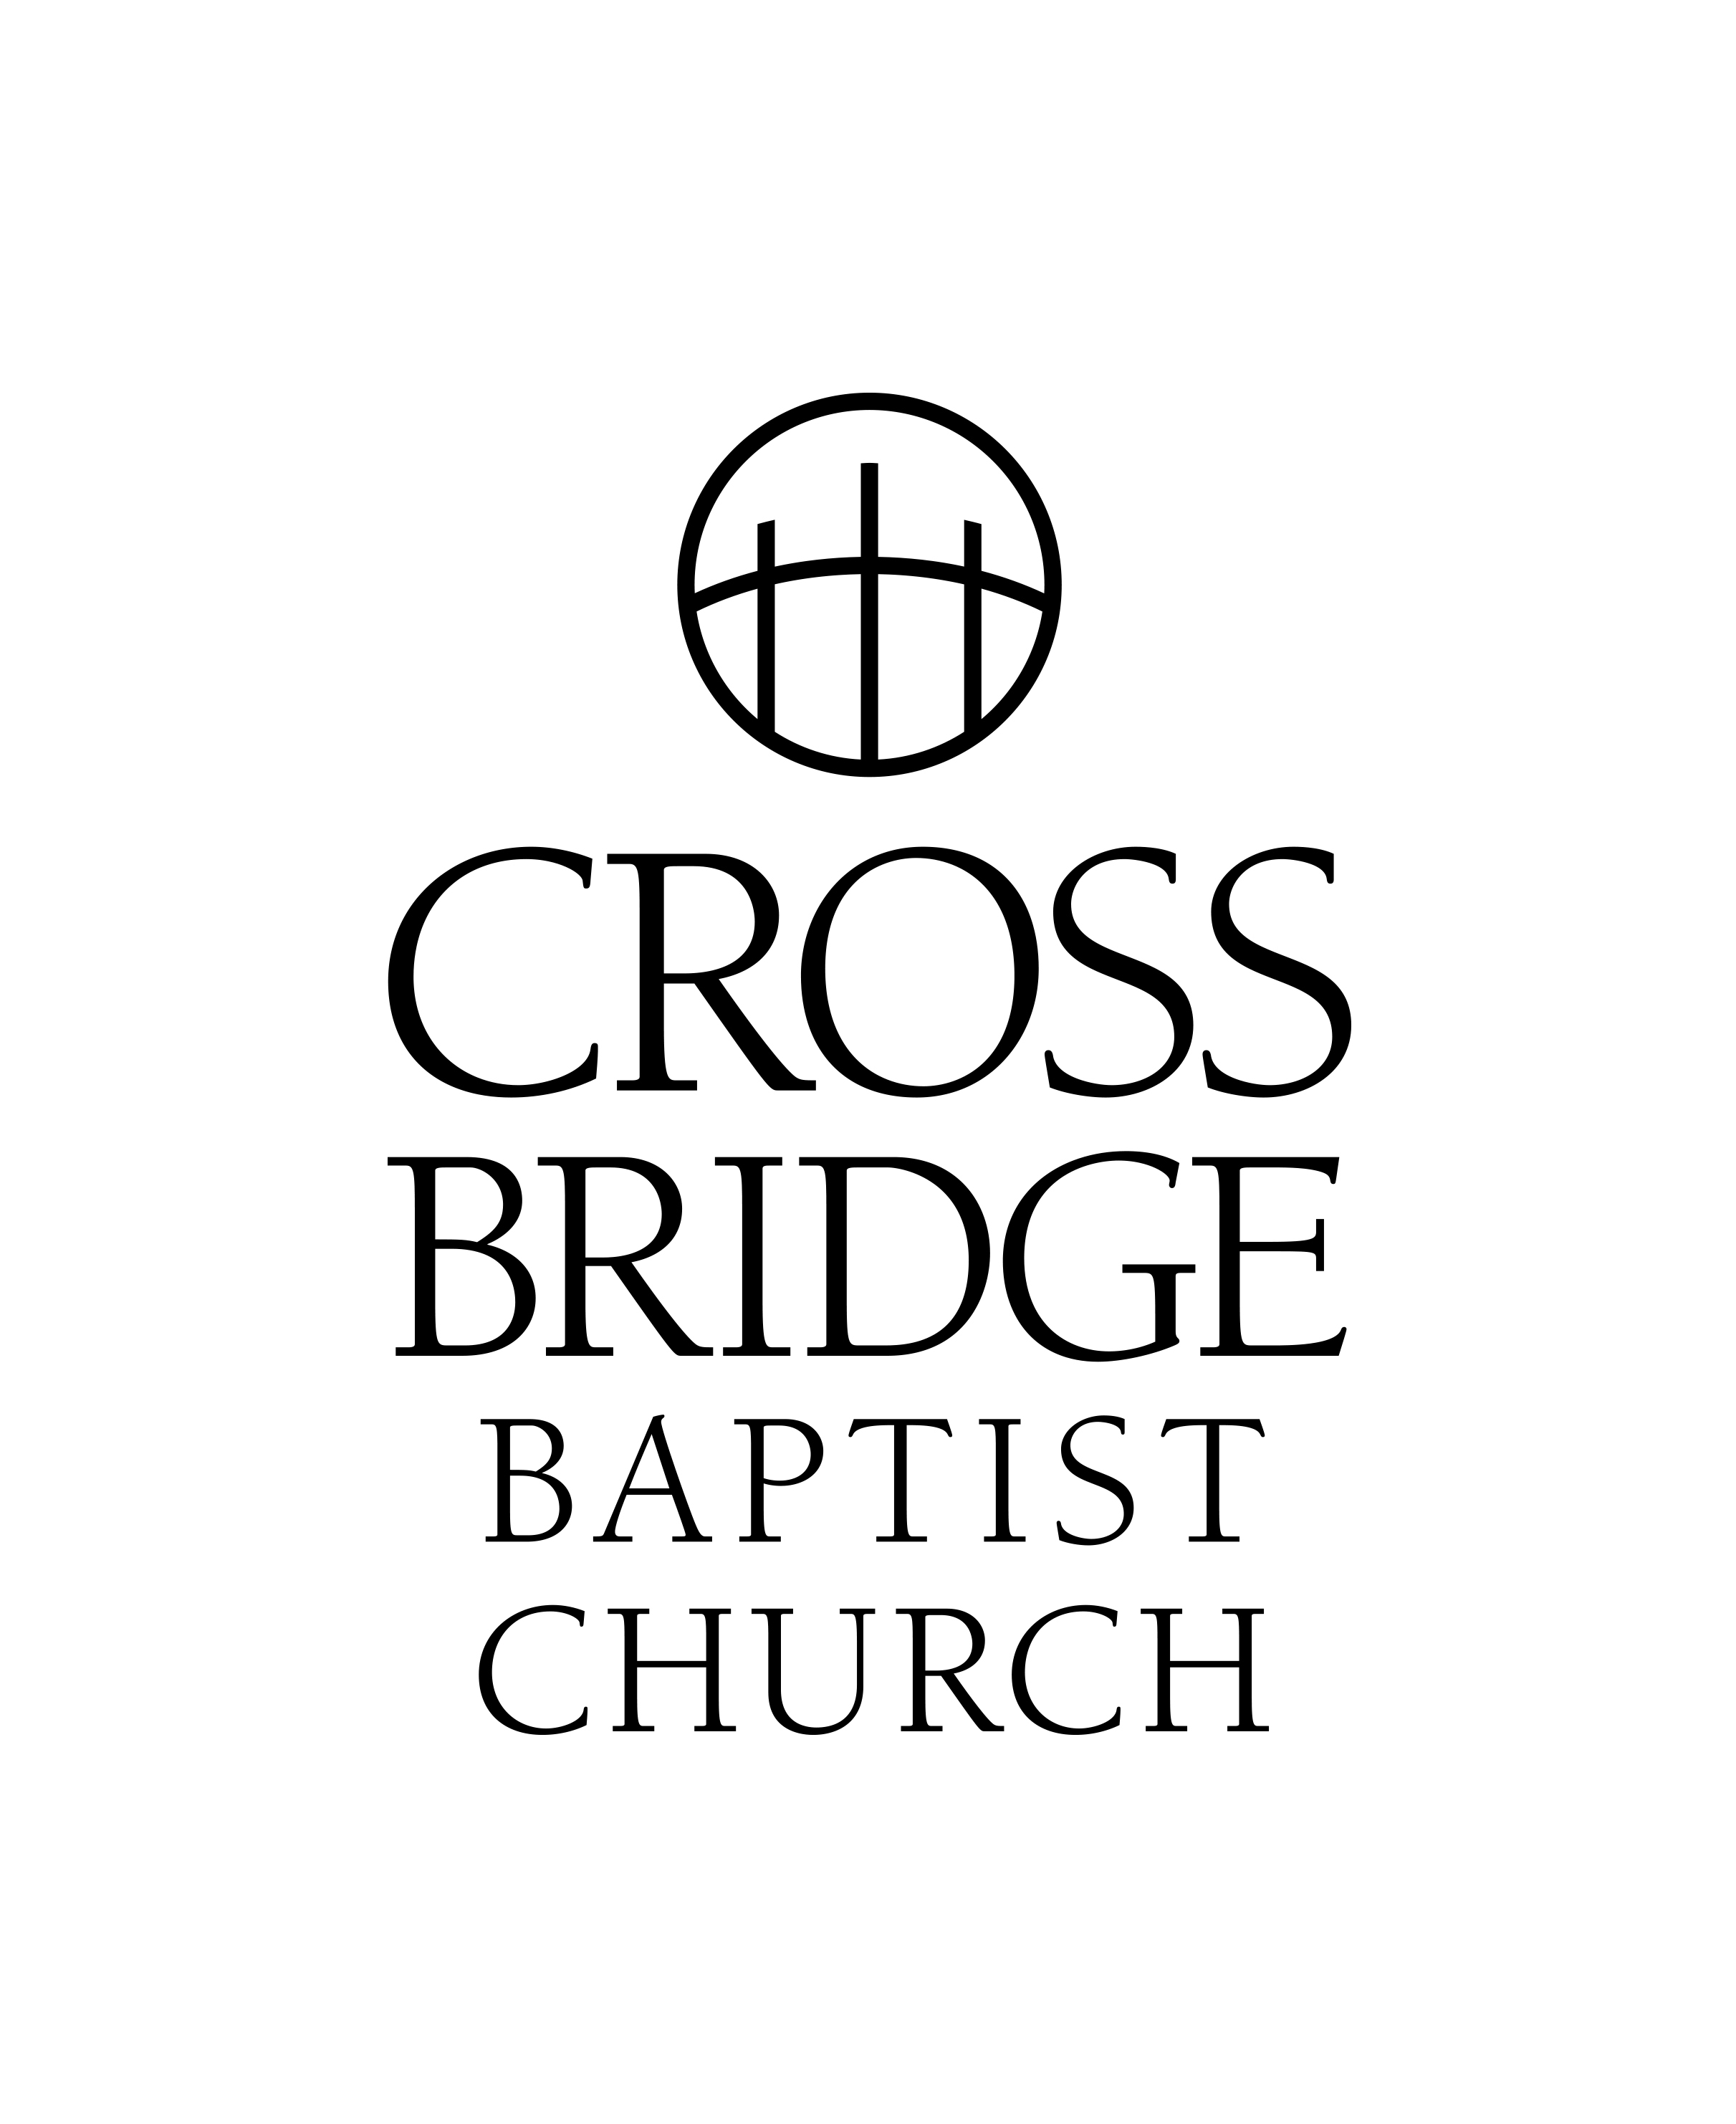 Cross Bridge Baptist Church